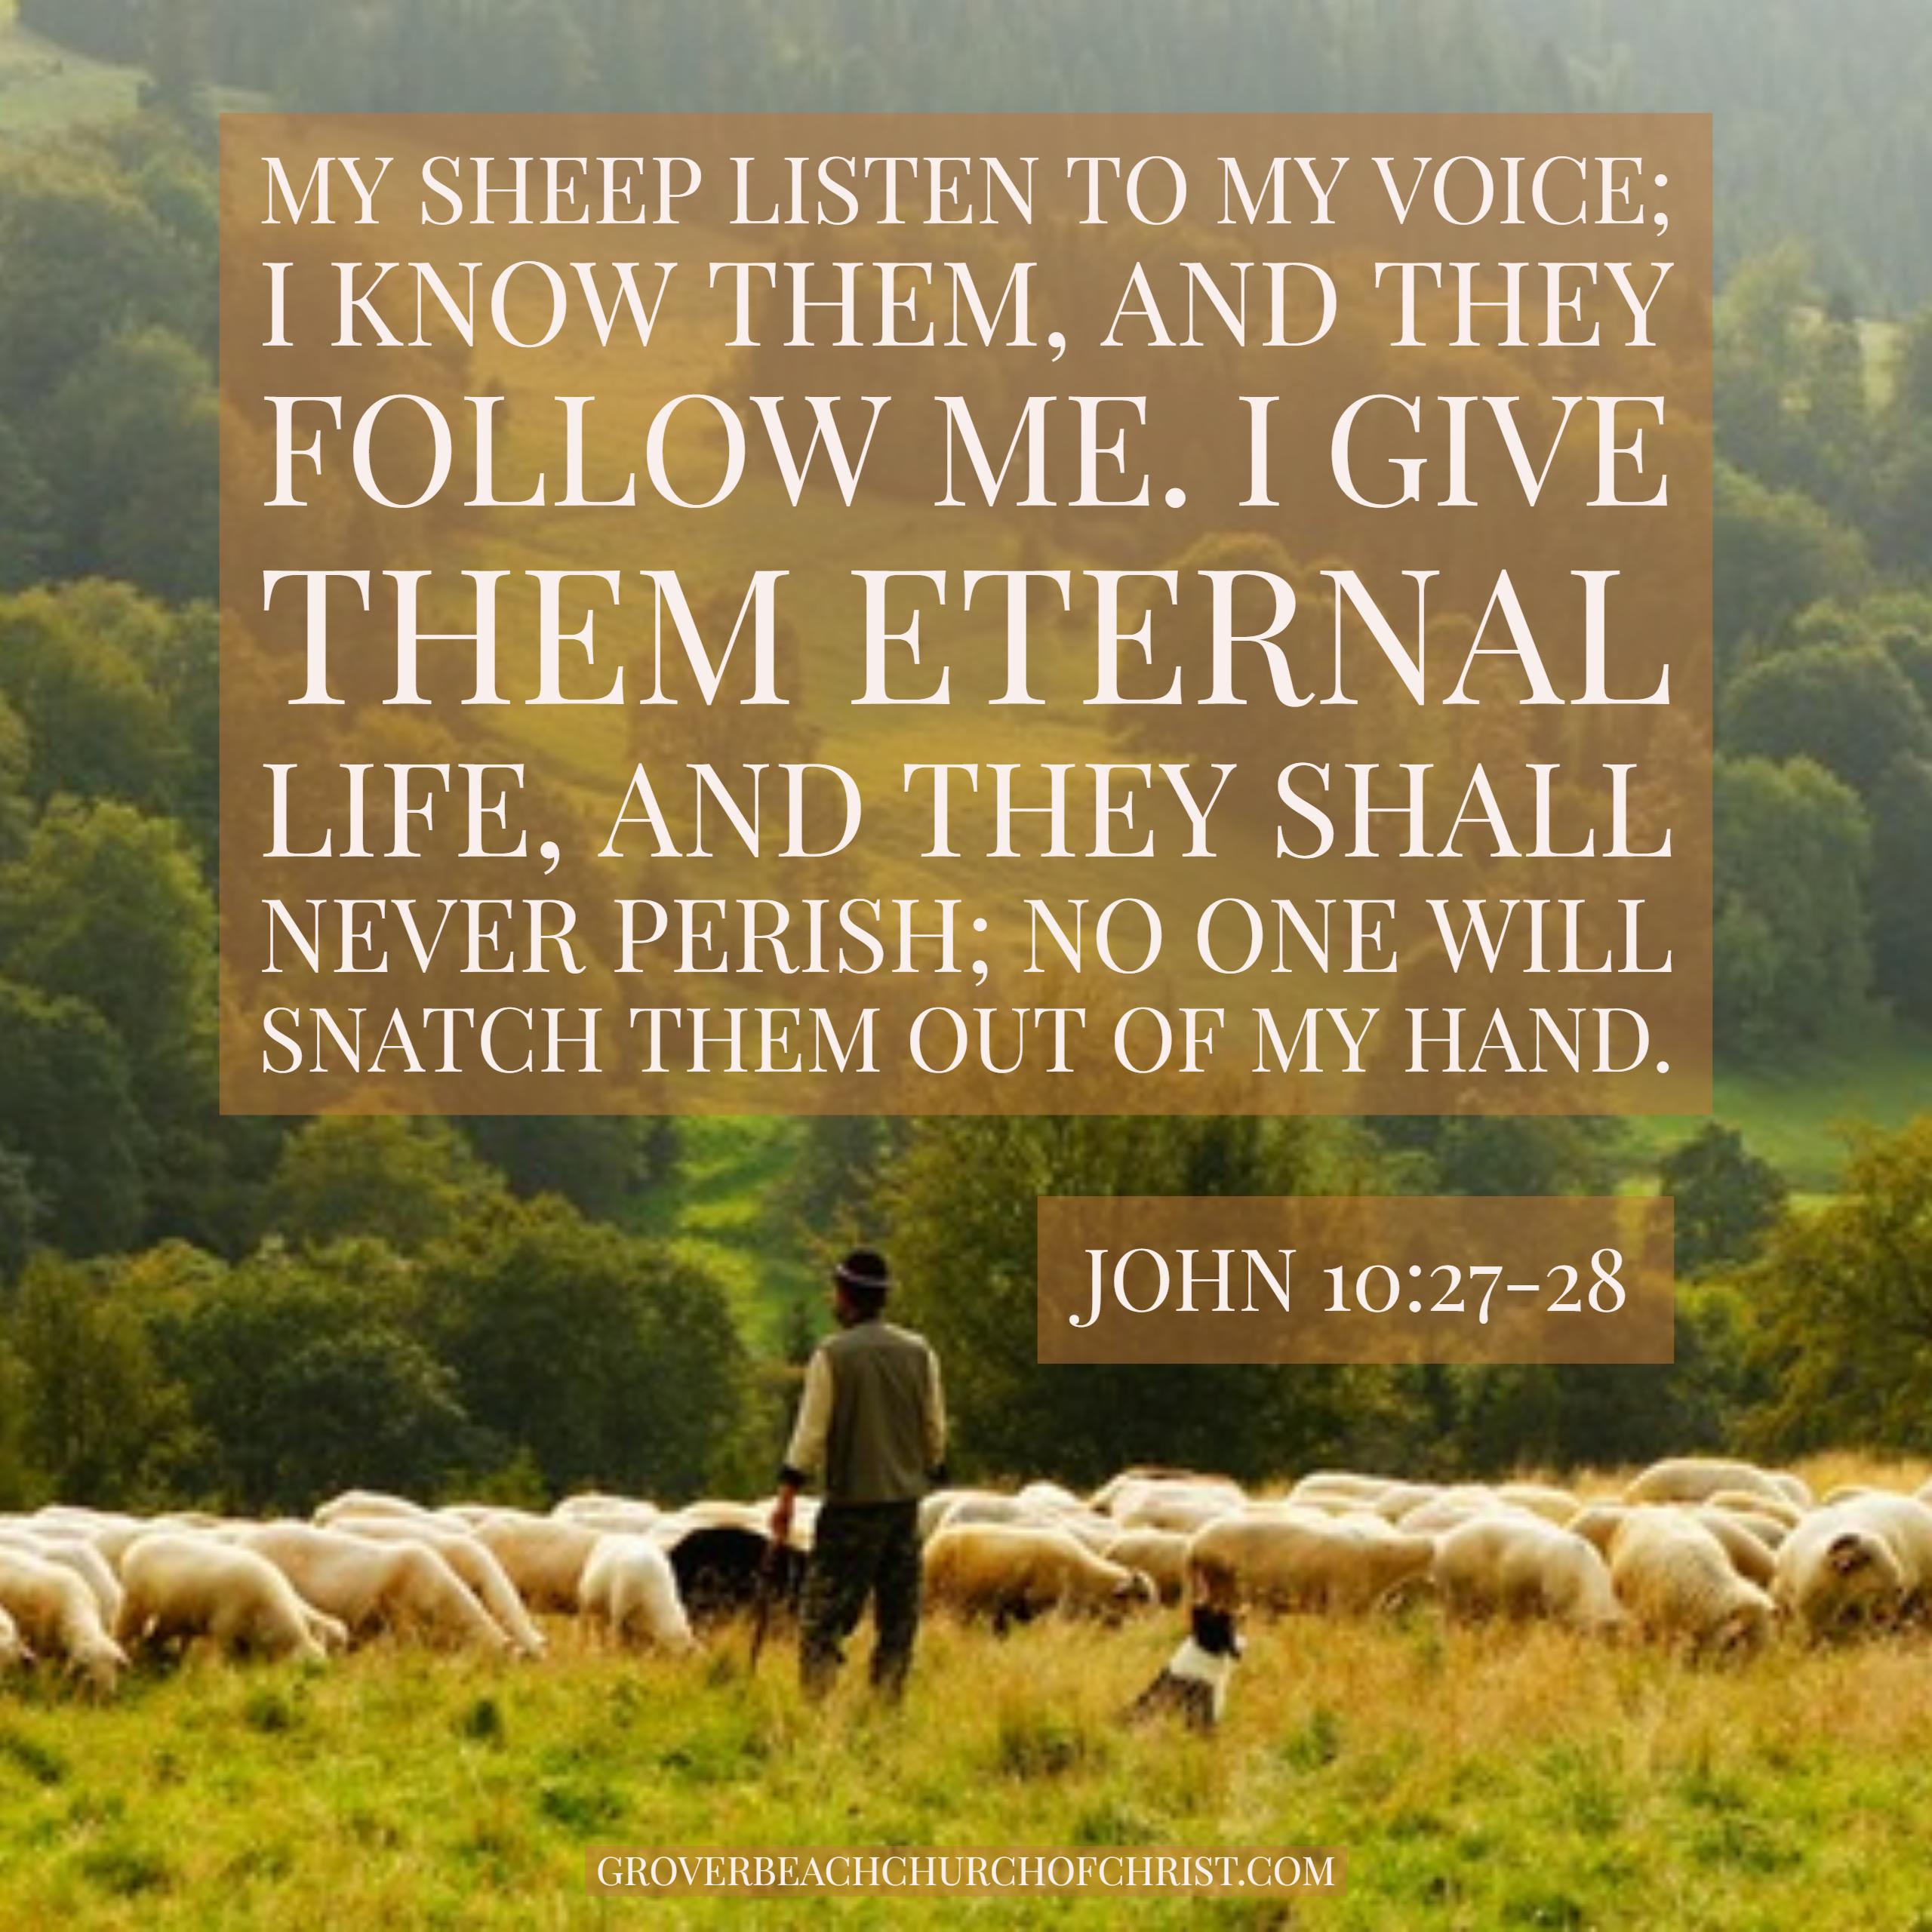 john-10:27-28-my-sheep-listen-to-my-voice